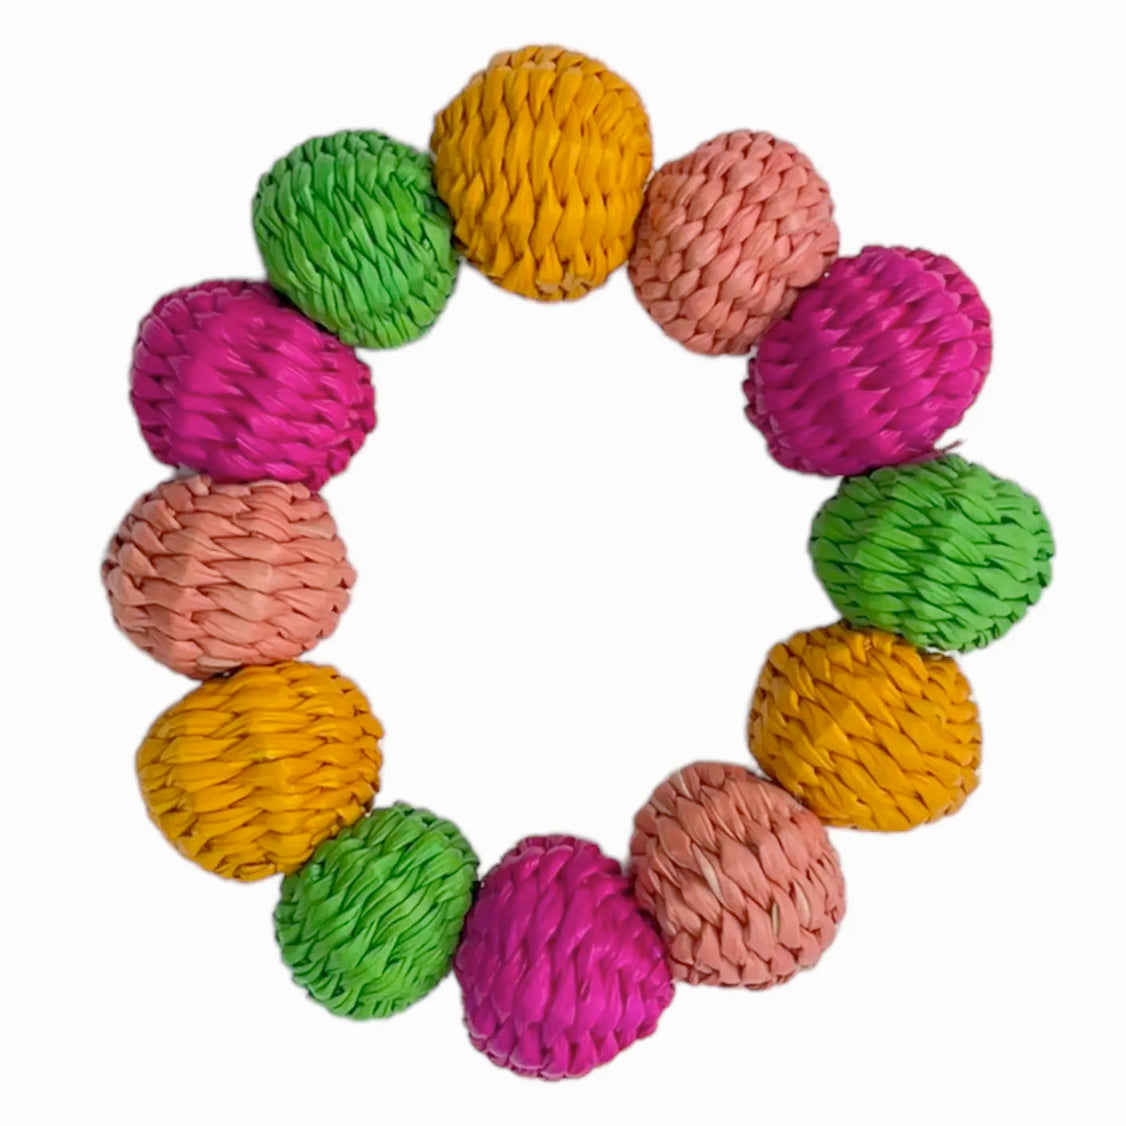 Multicolored Woven Balls Napkin Rings - Set of 4